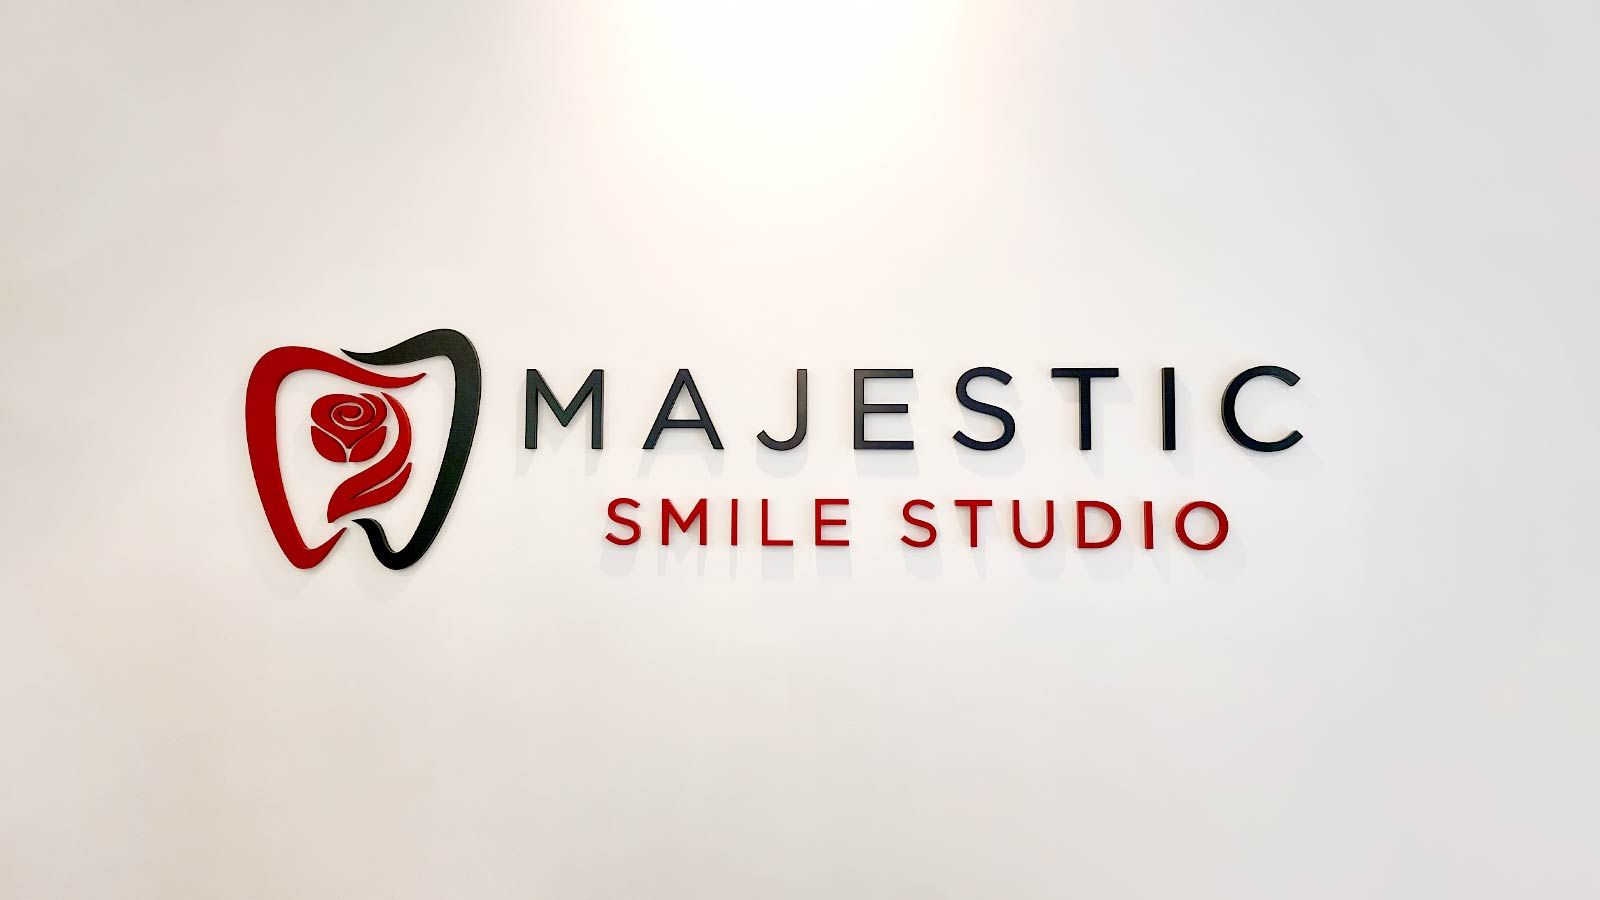 Majestic Smile Studio interior logo sign